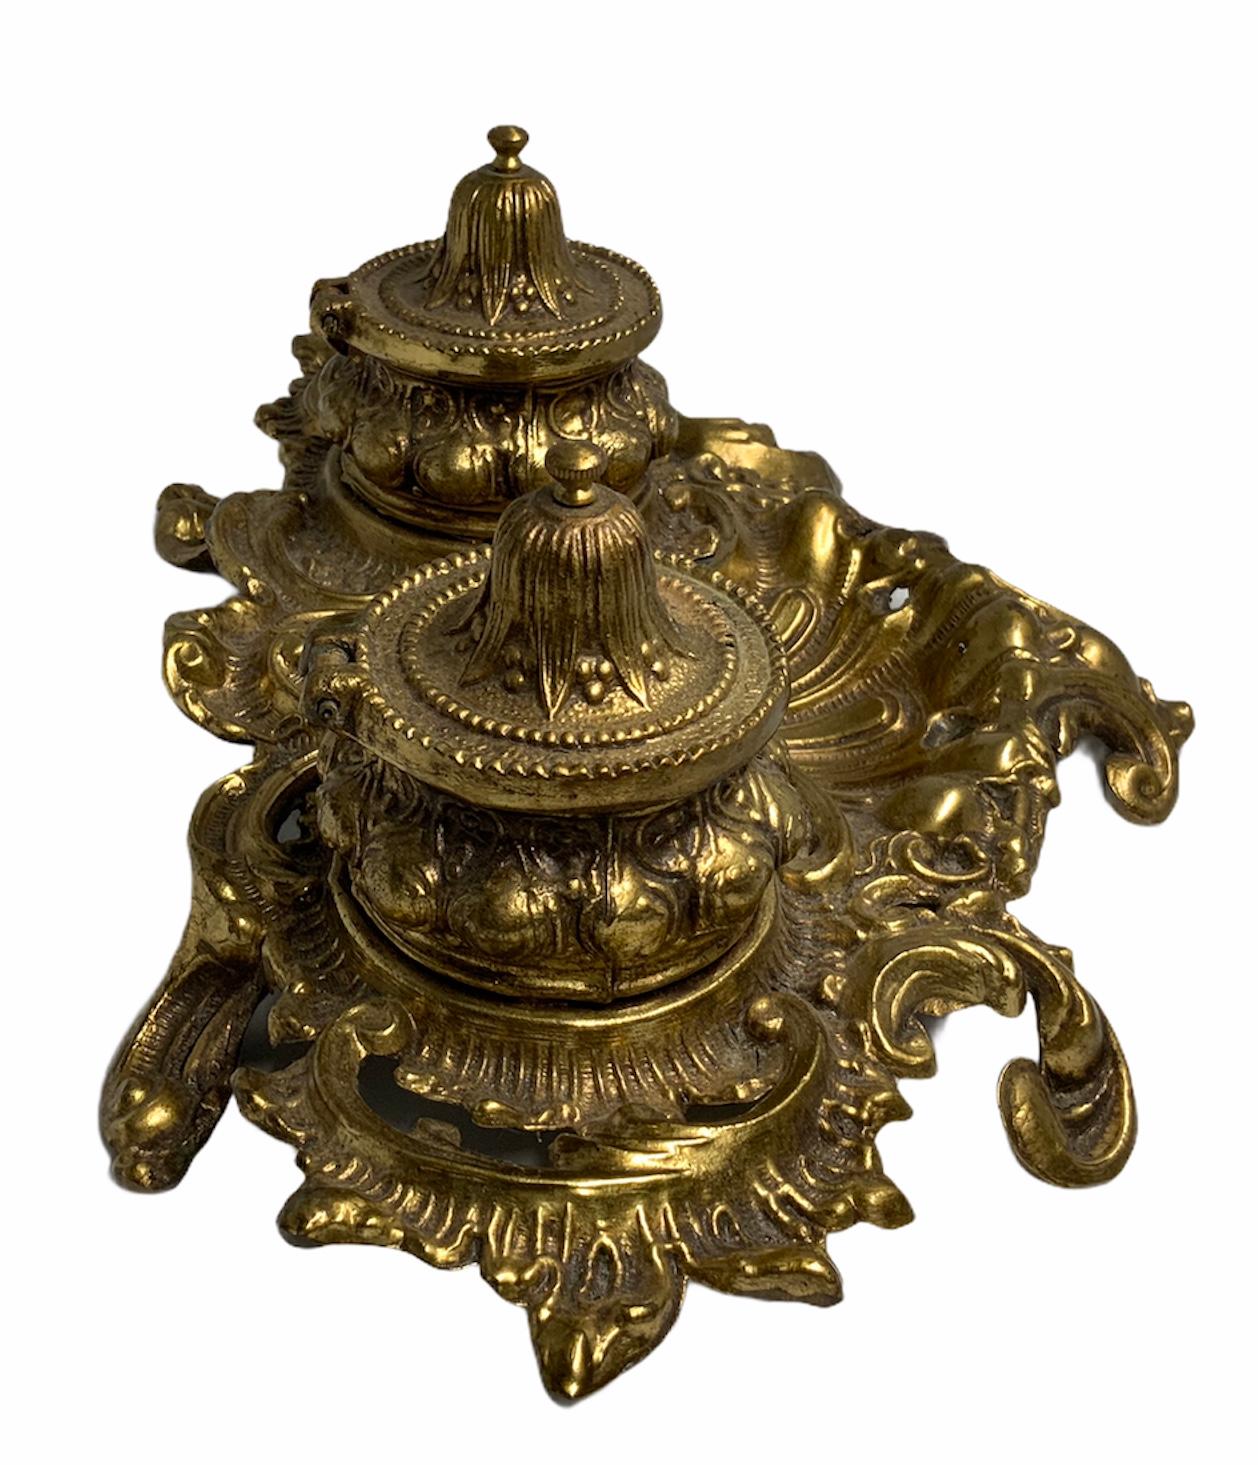 Rococo Revival Rococo Style Heavy Bronze Inkwell For Sale